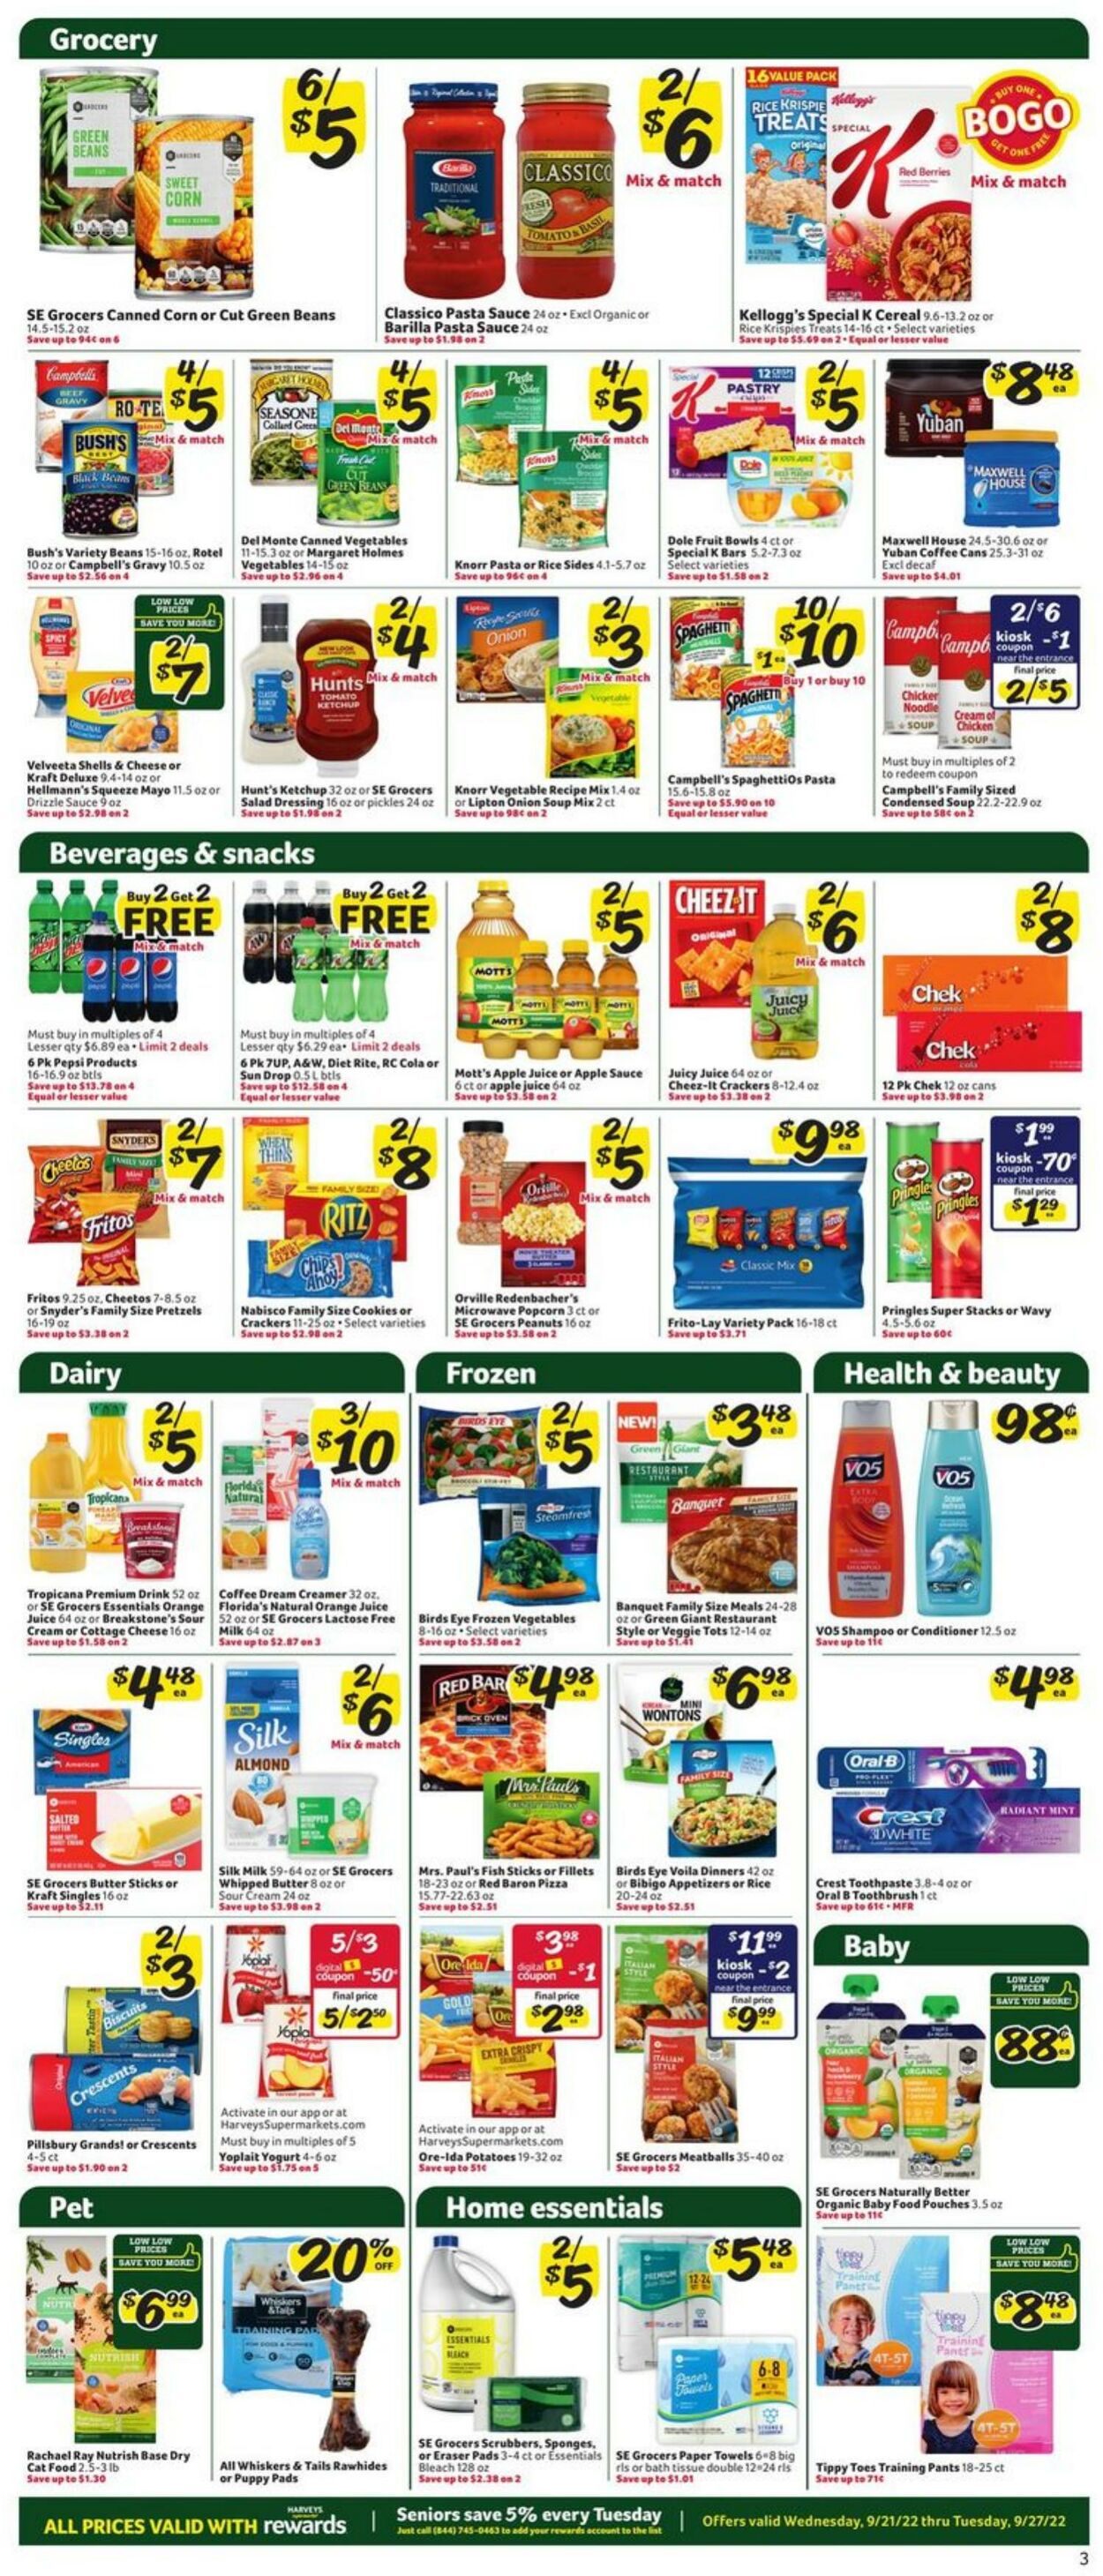 Weekly ad Harvey's Supermarkets 09/21/2022 - 09/27/2022